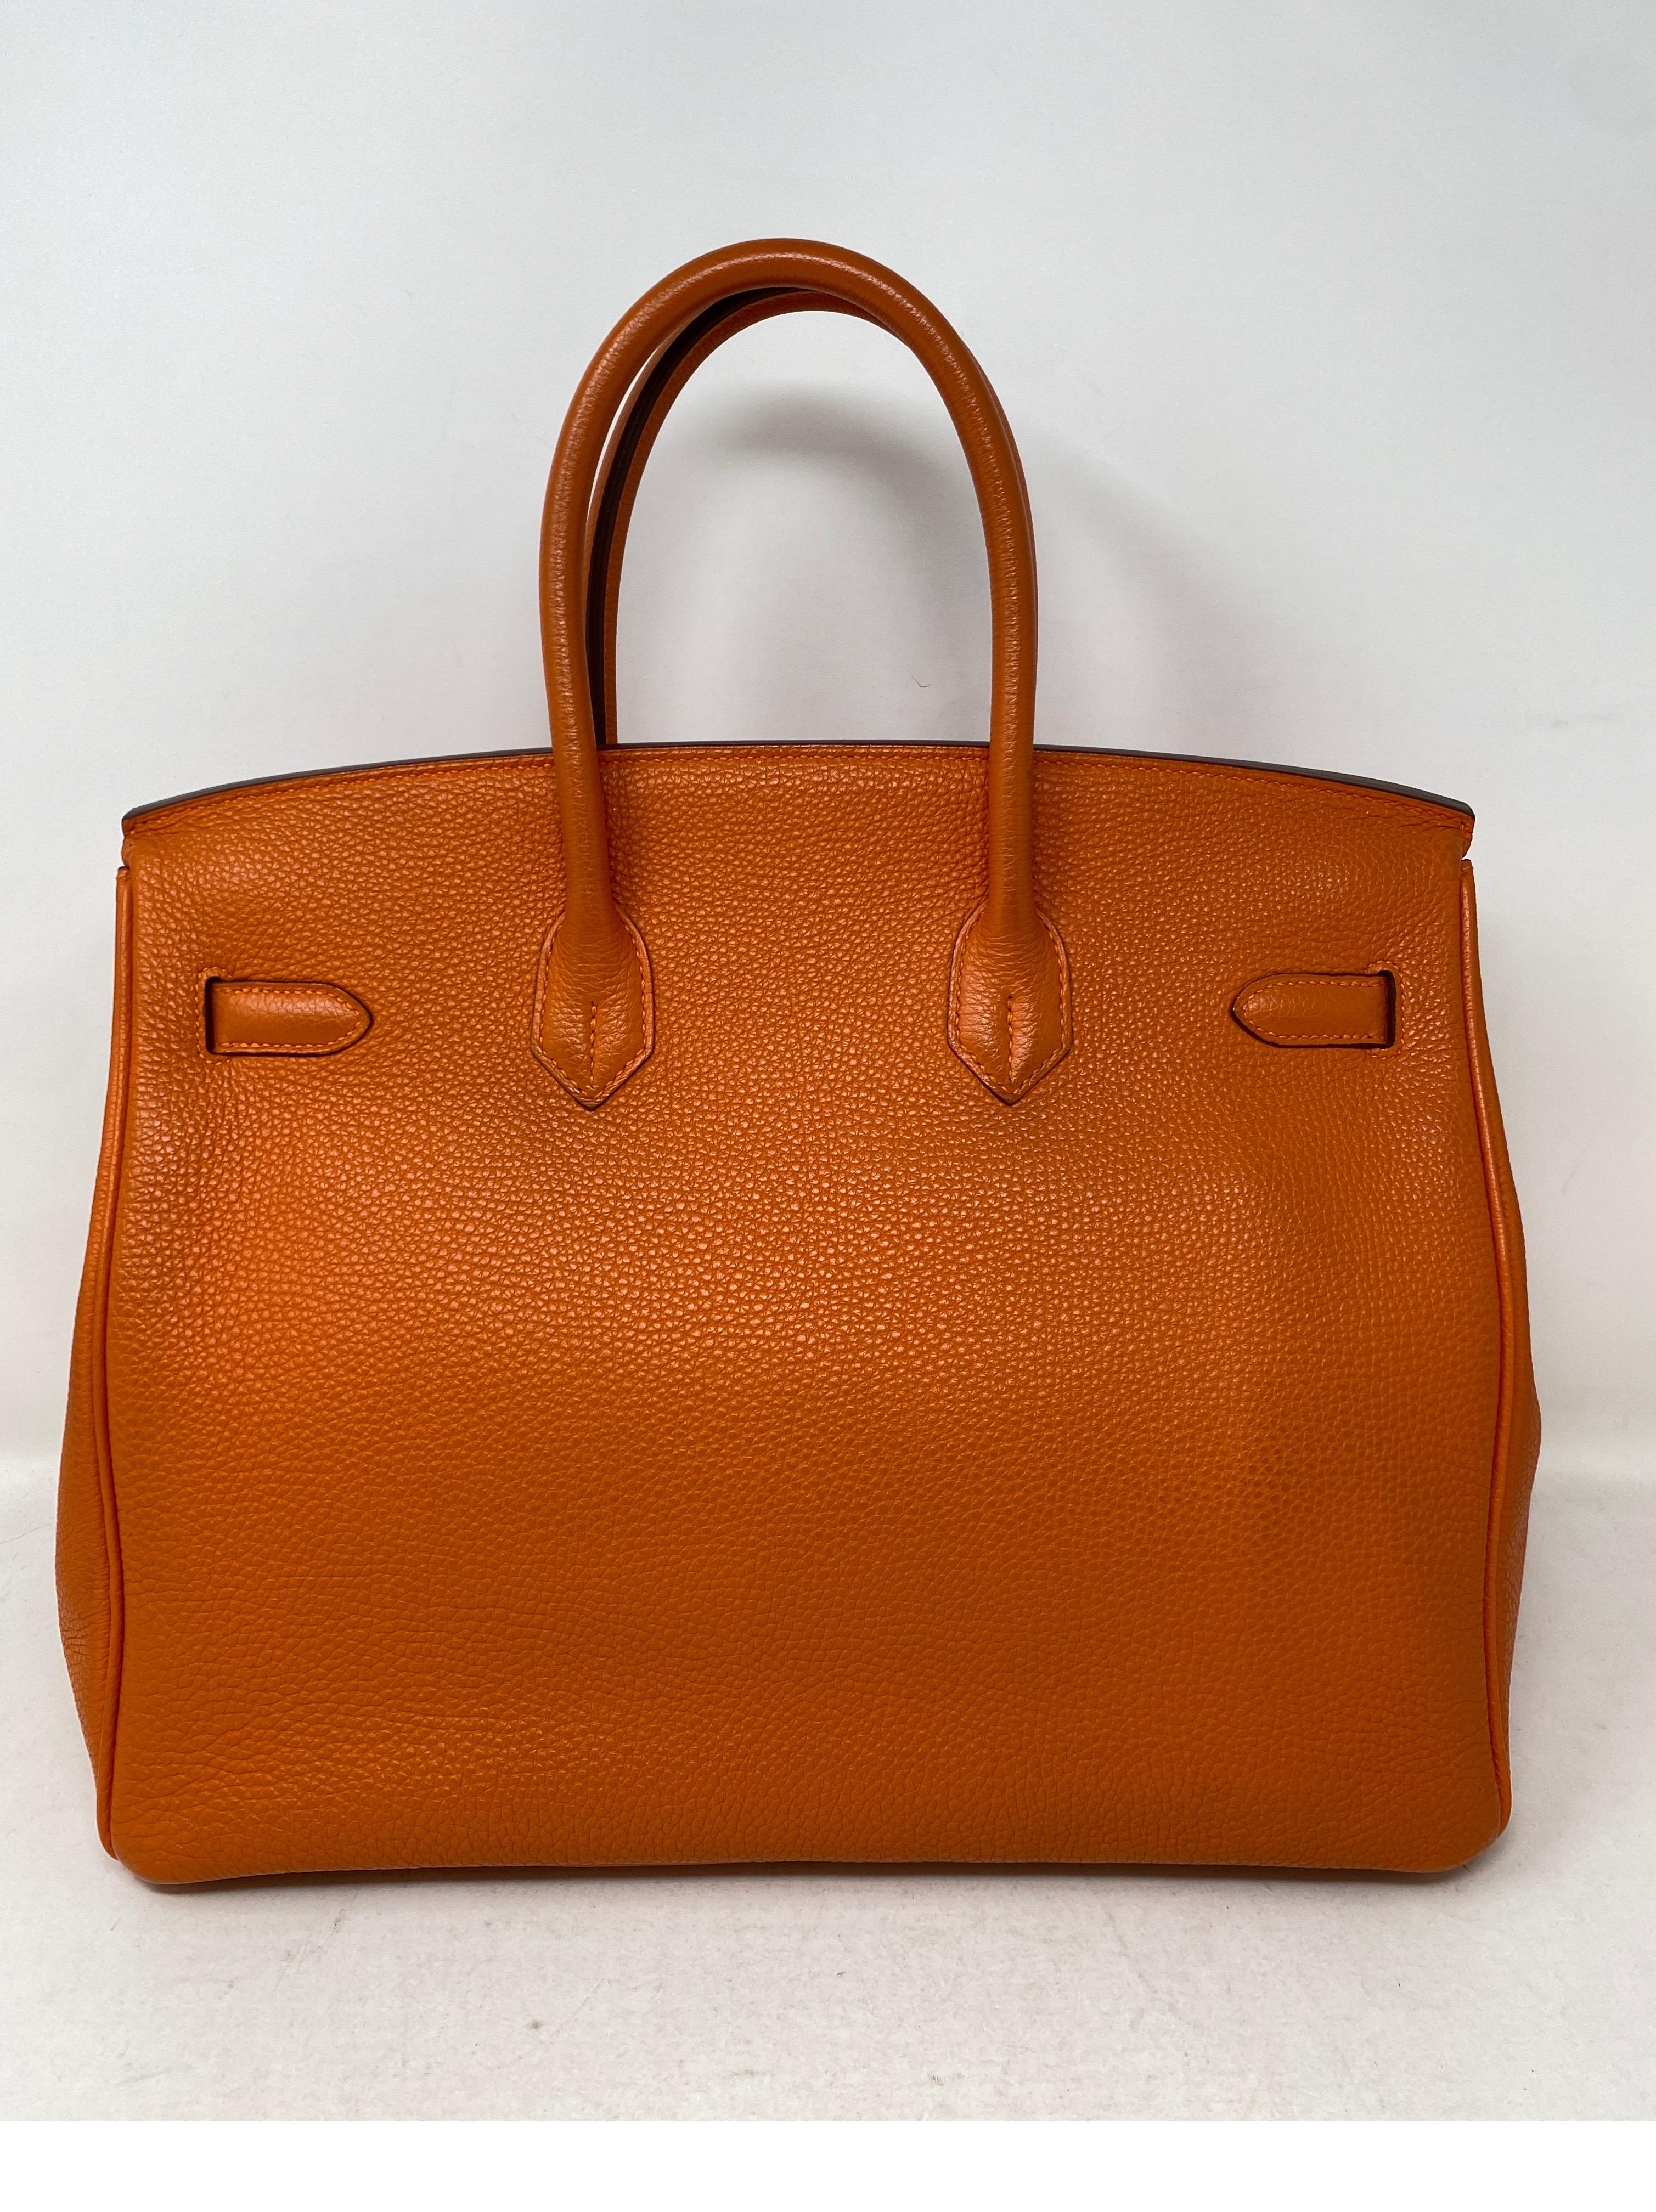 Hermès - Sac Birkin 35 orange  5